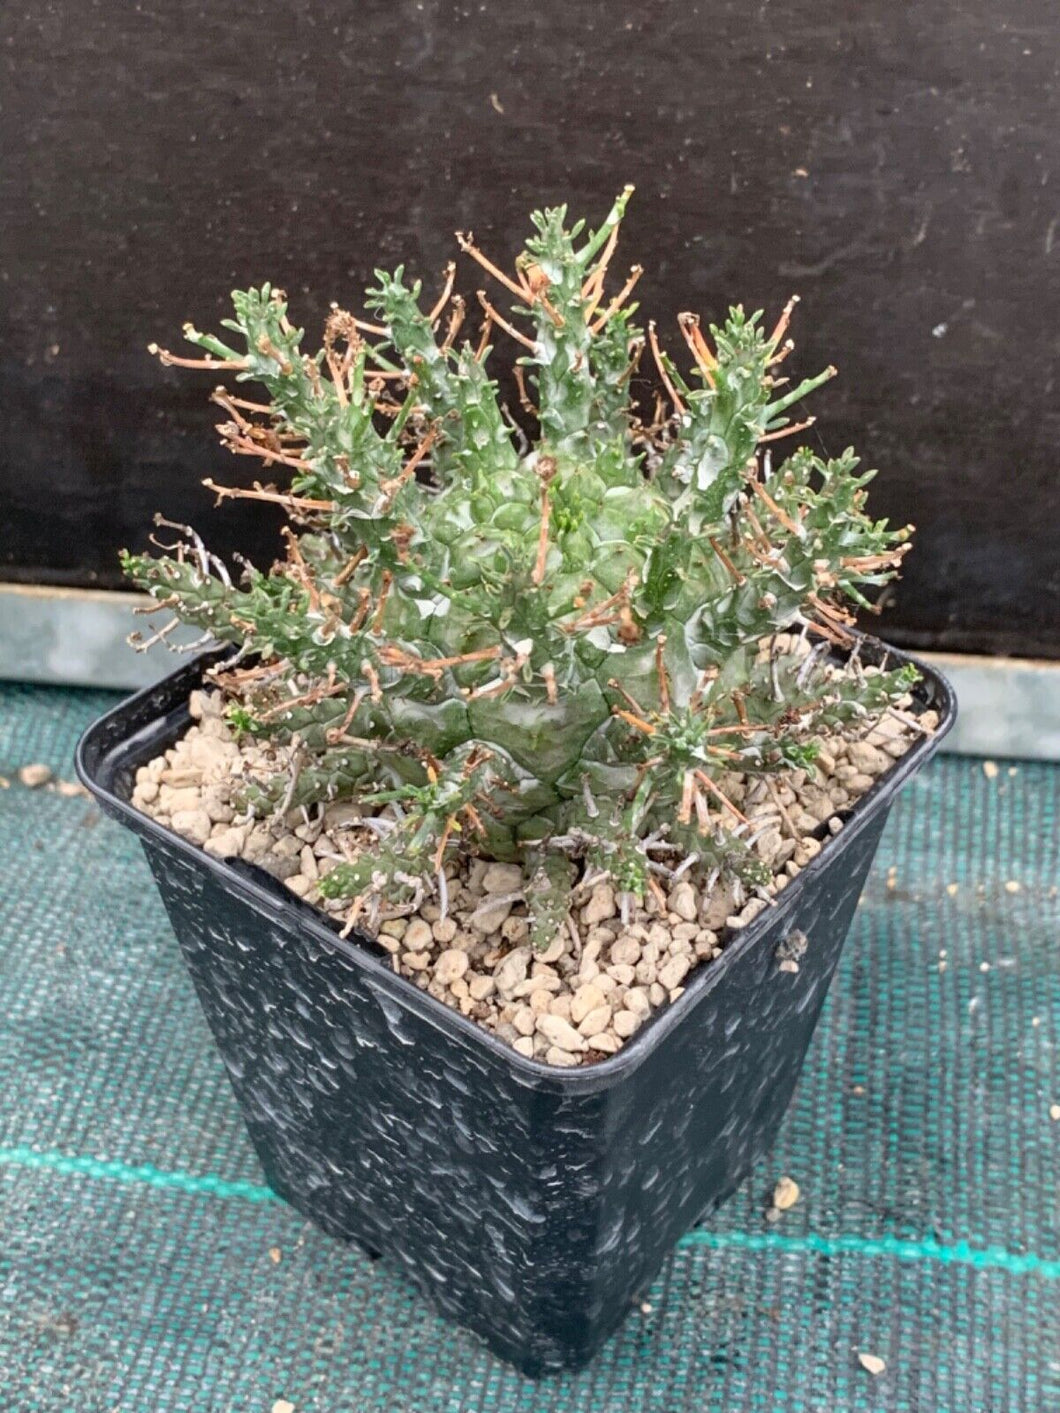 Euphorbia decepta LIVE PLANT #2115 For Sale